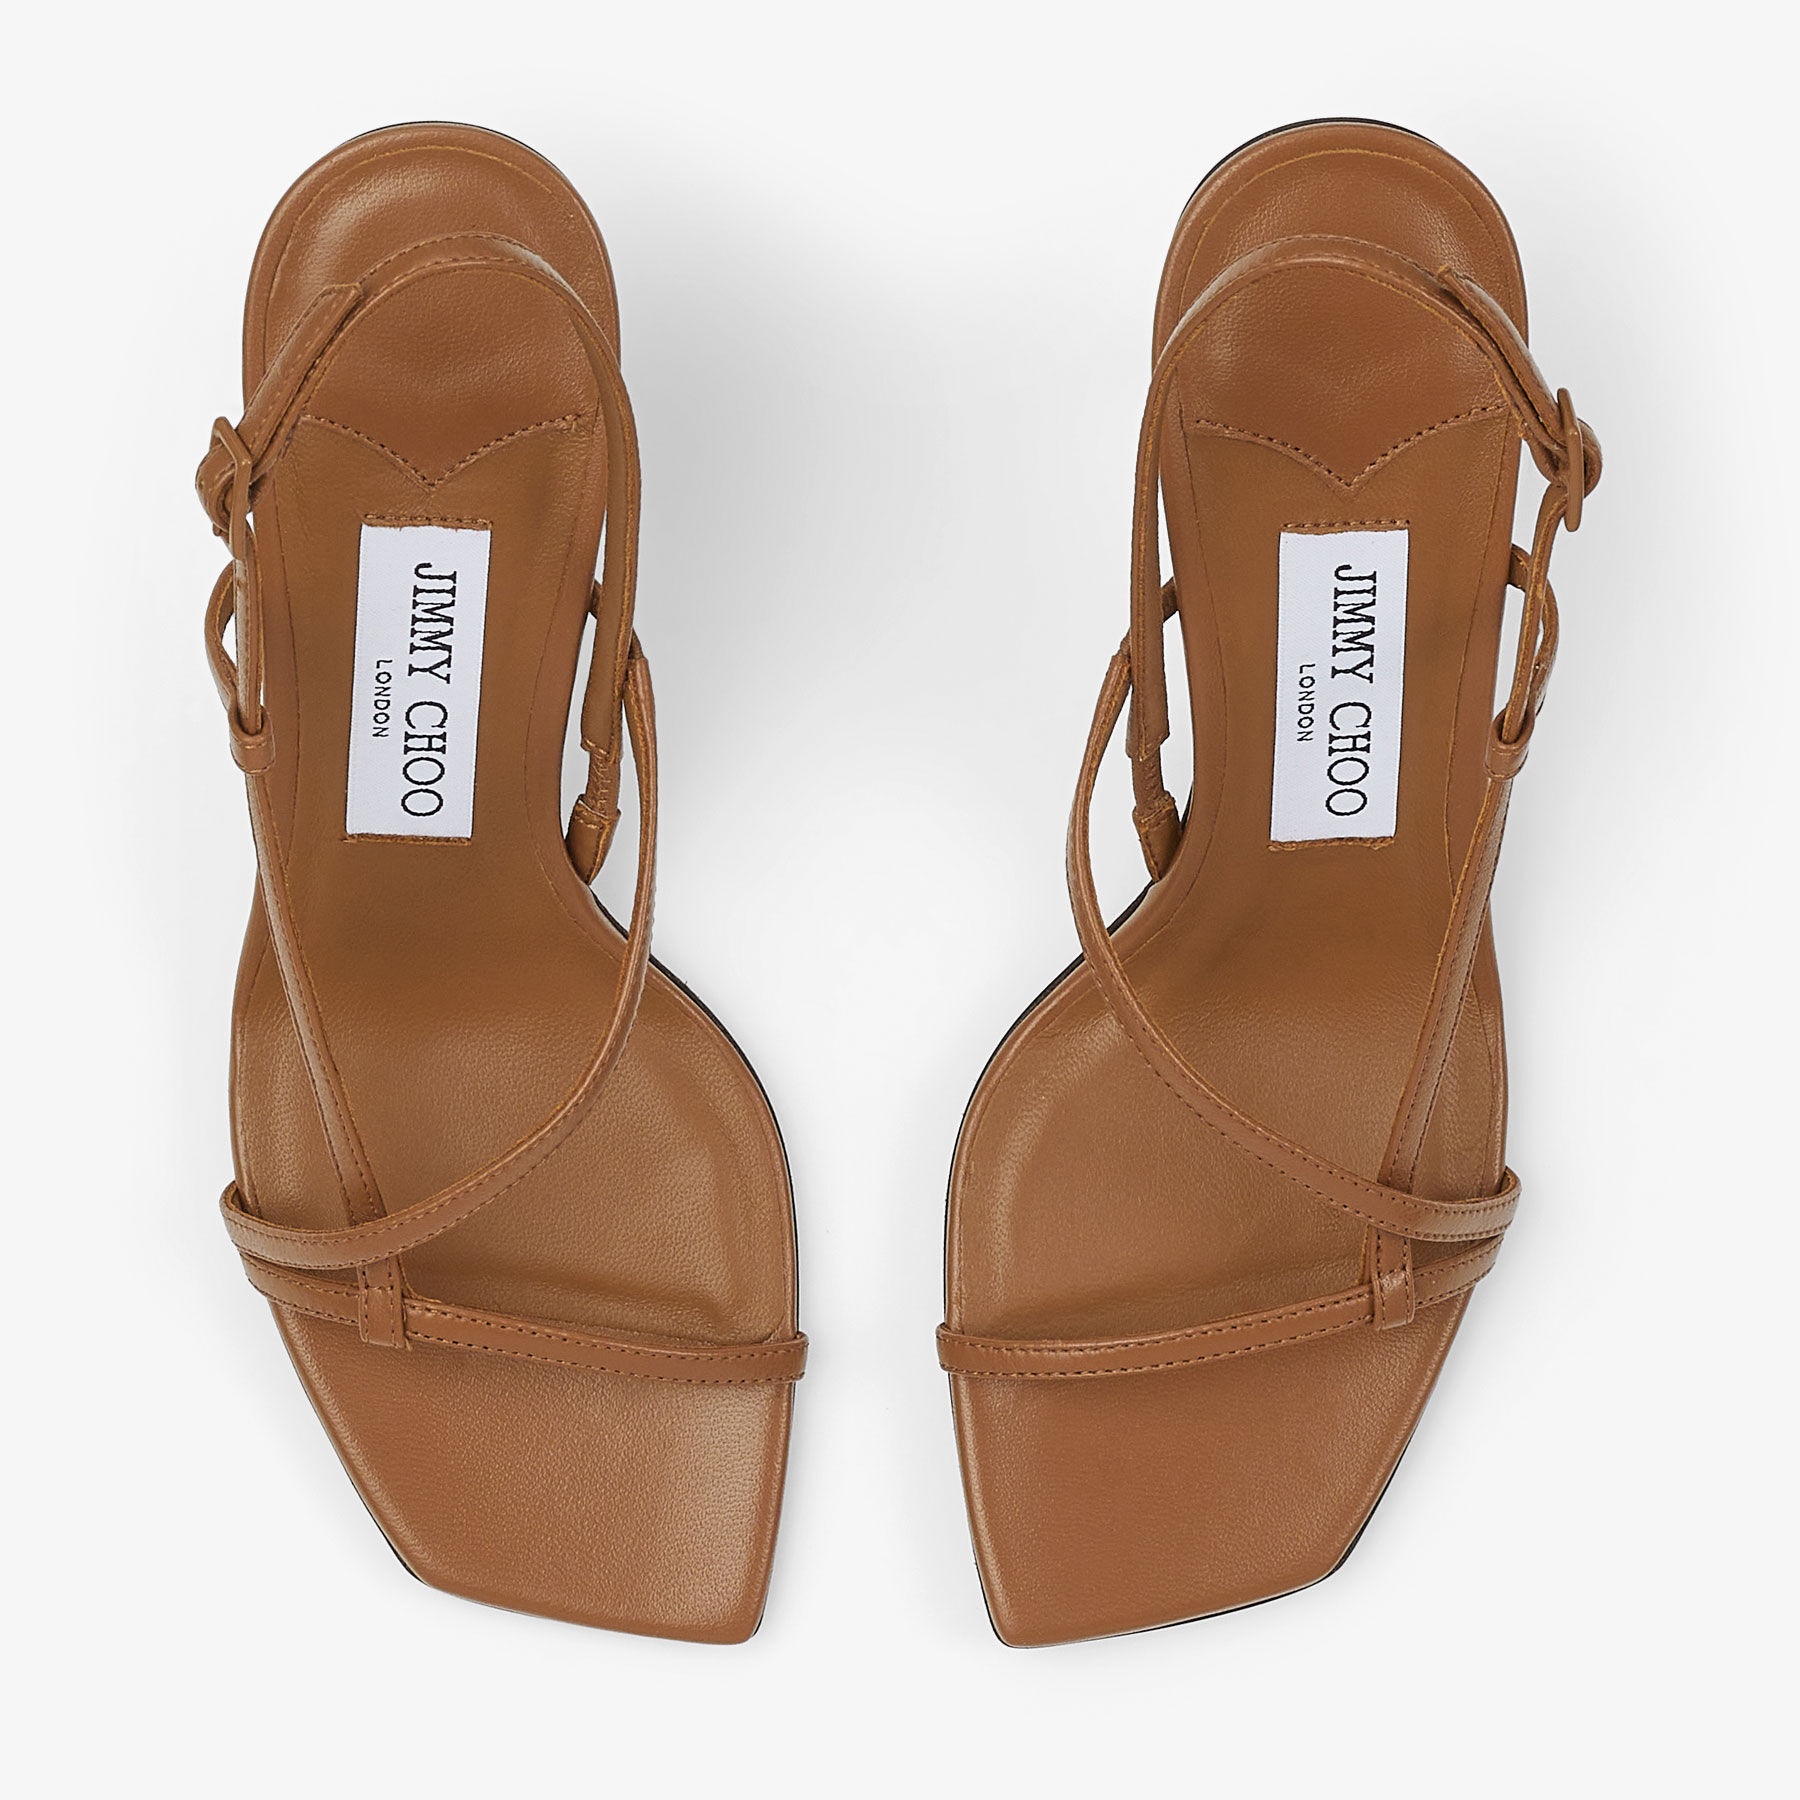 Etana 80
Tan/Tortoise Nappa Leather Sandals - 3